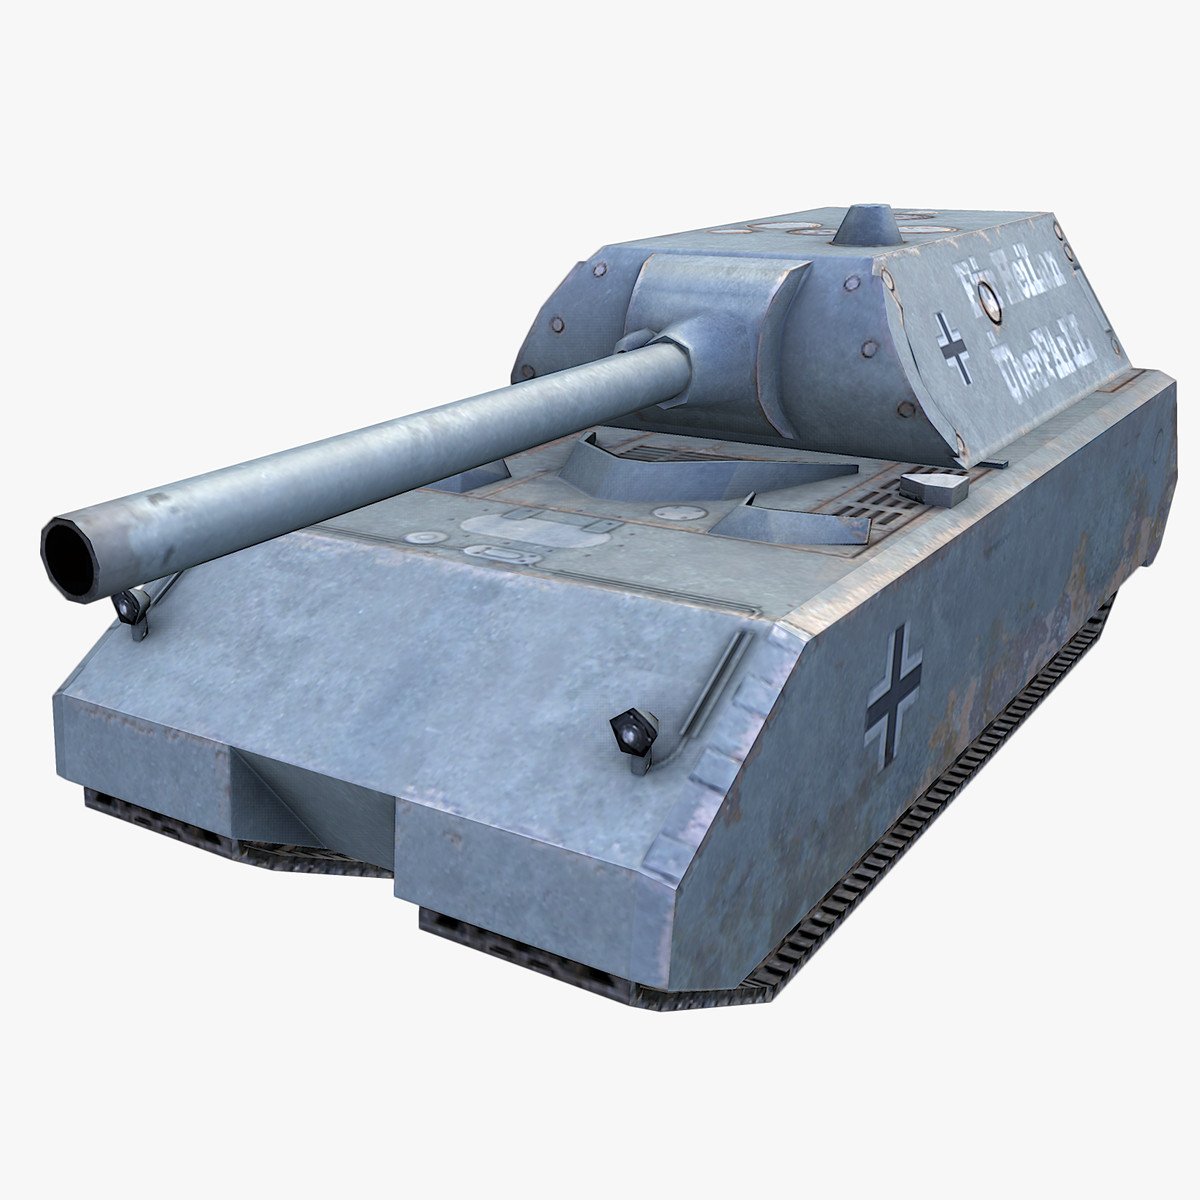 WW2 Maus Tank 3D model